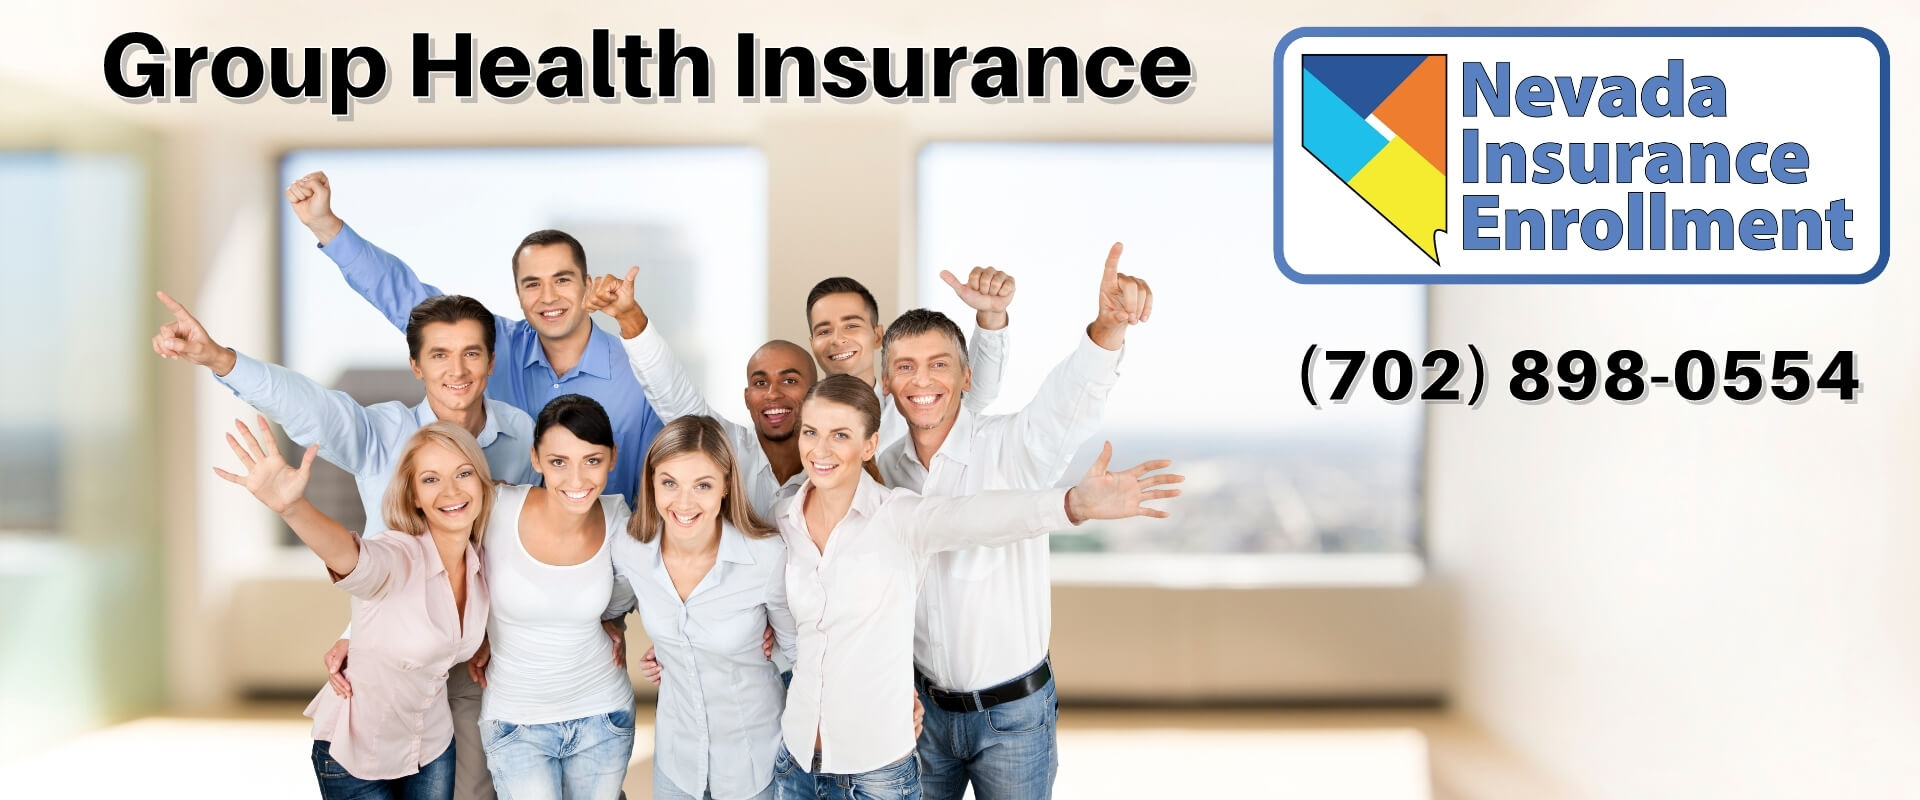 Group Health Insurance MAIN page image